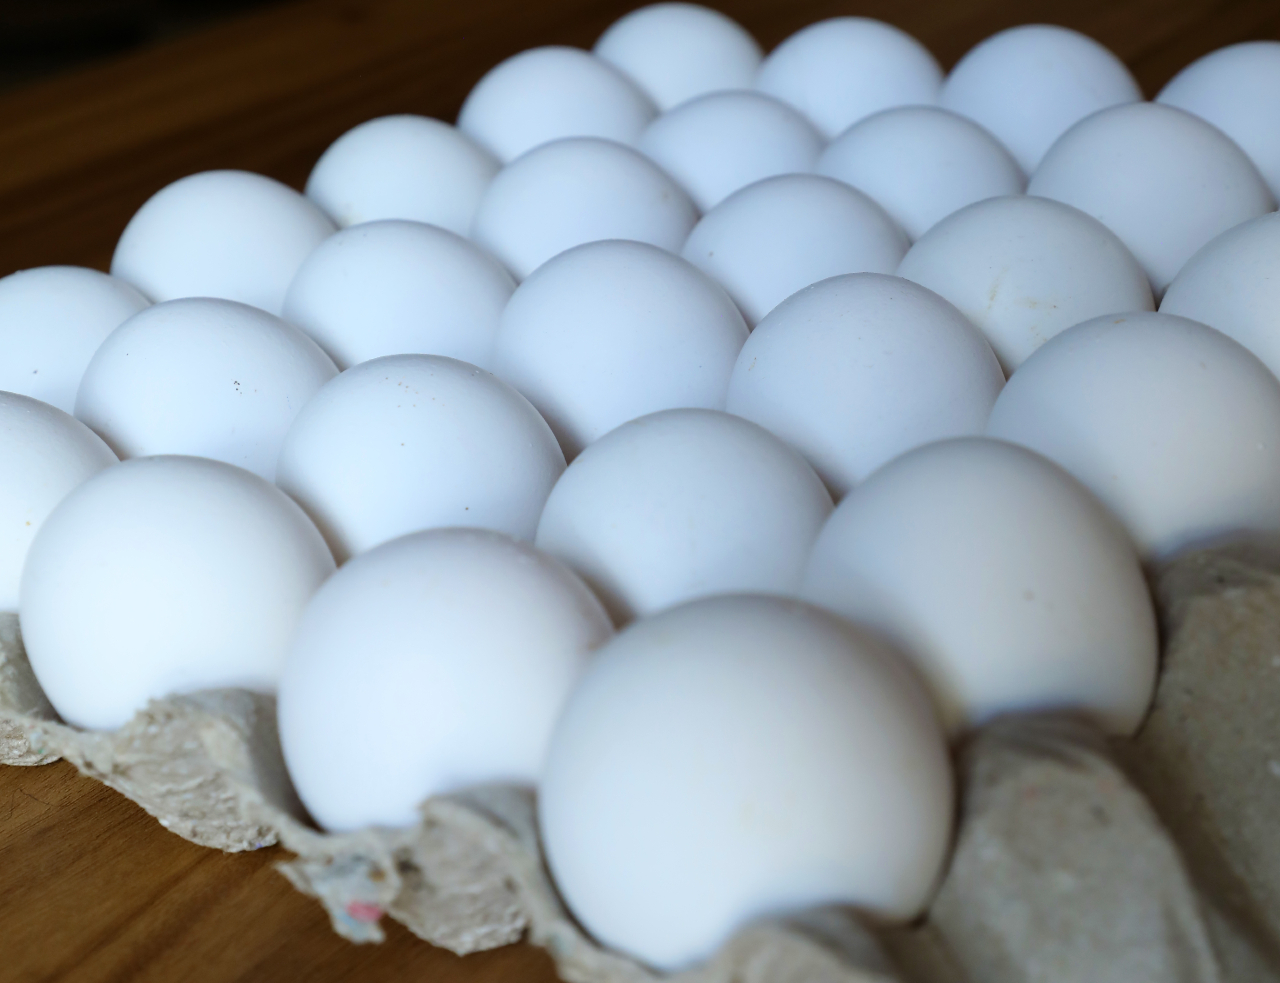 Wholesale egg farm